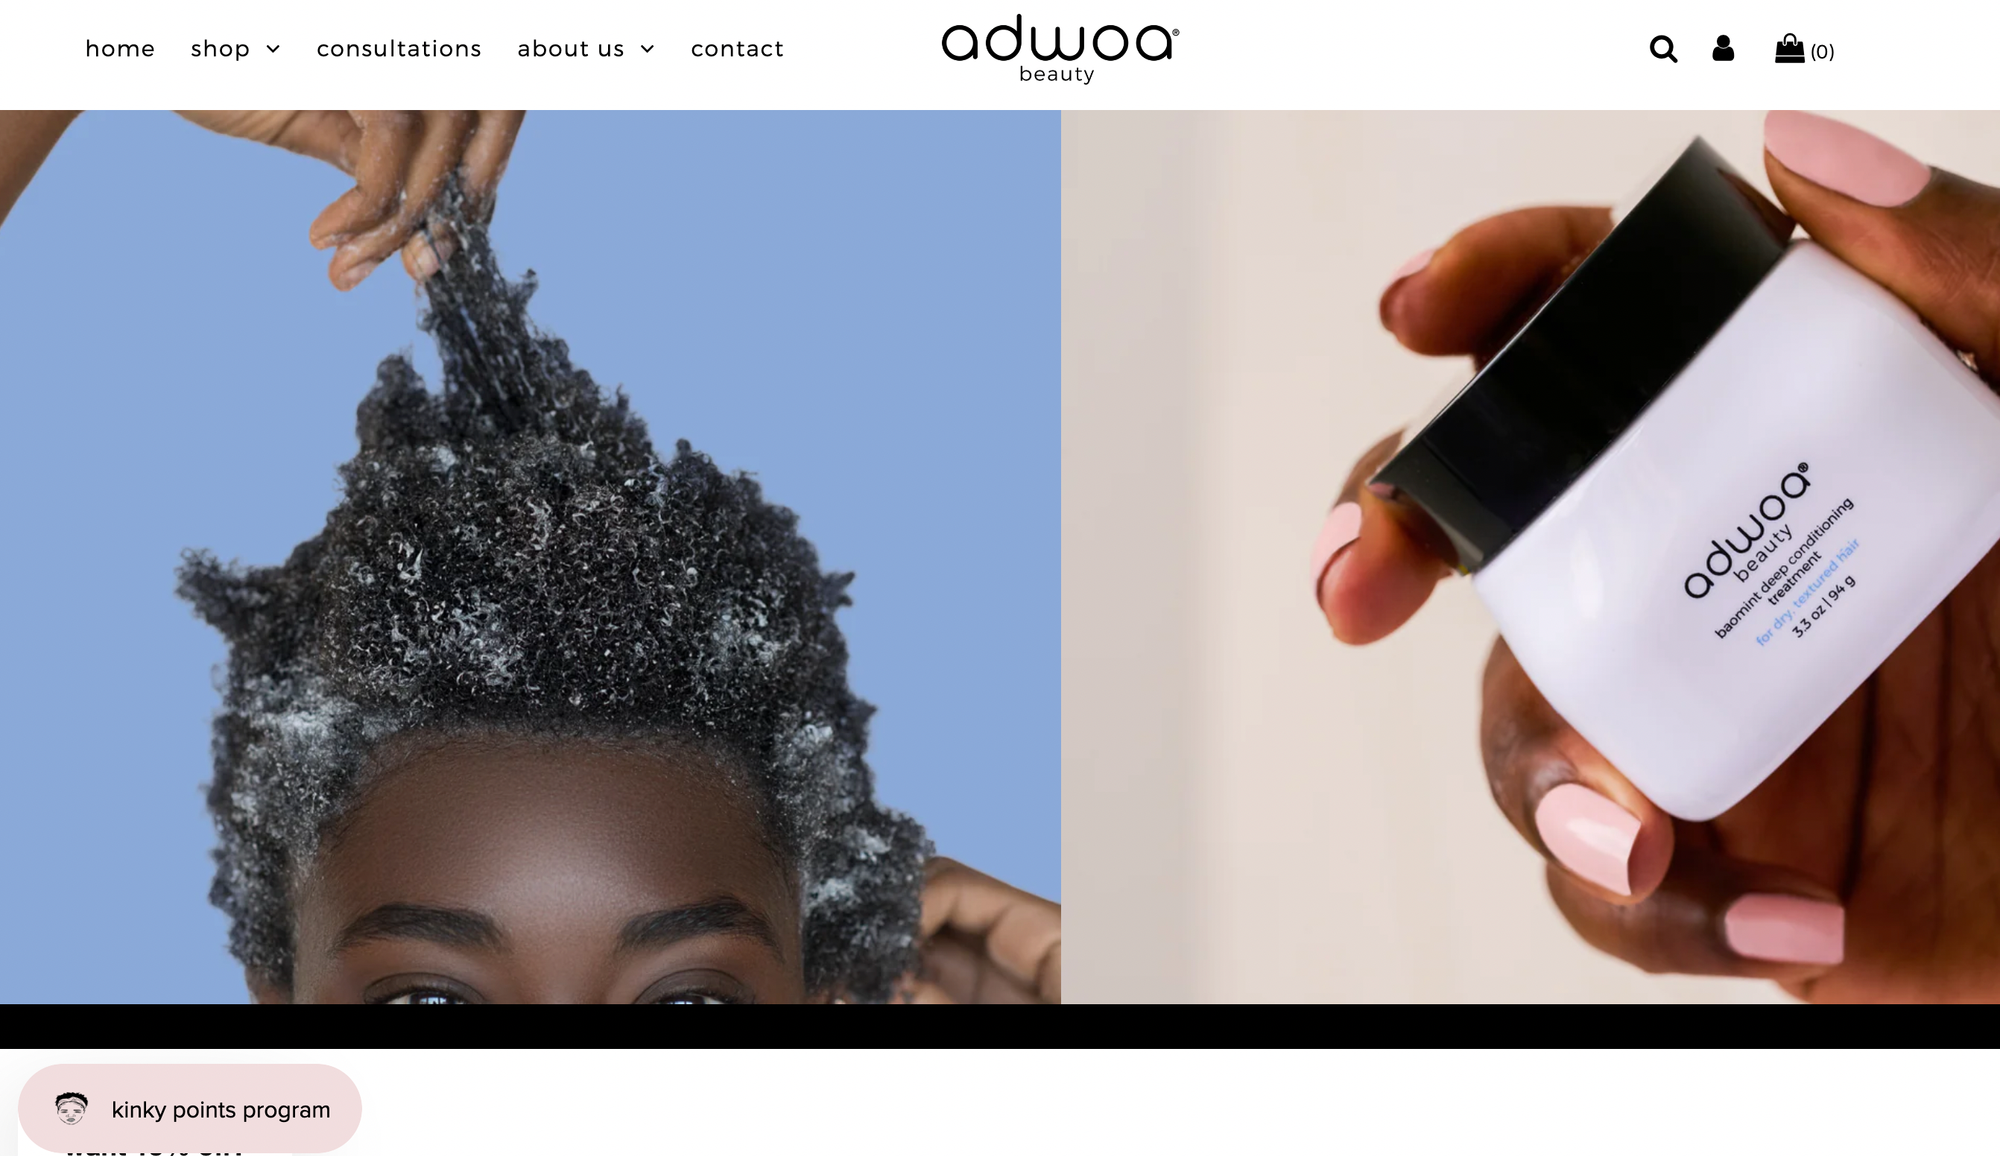 screenshot of ecommerce brand adwoa beauty